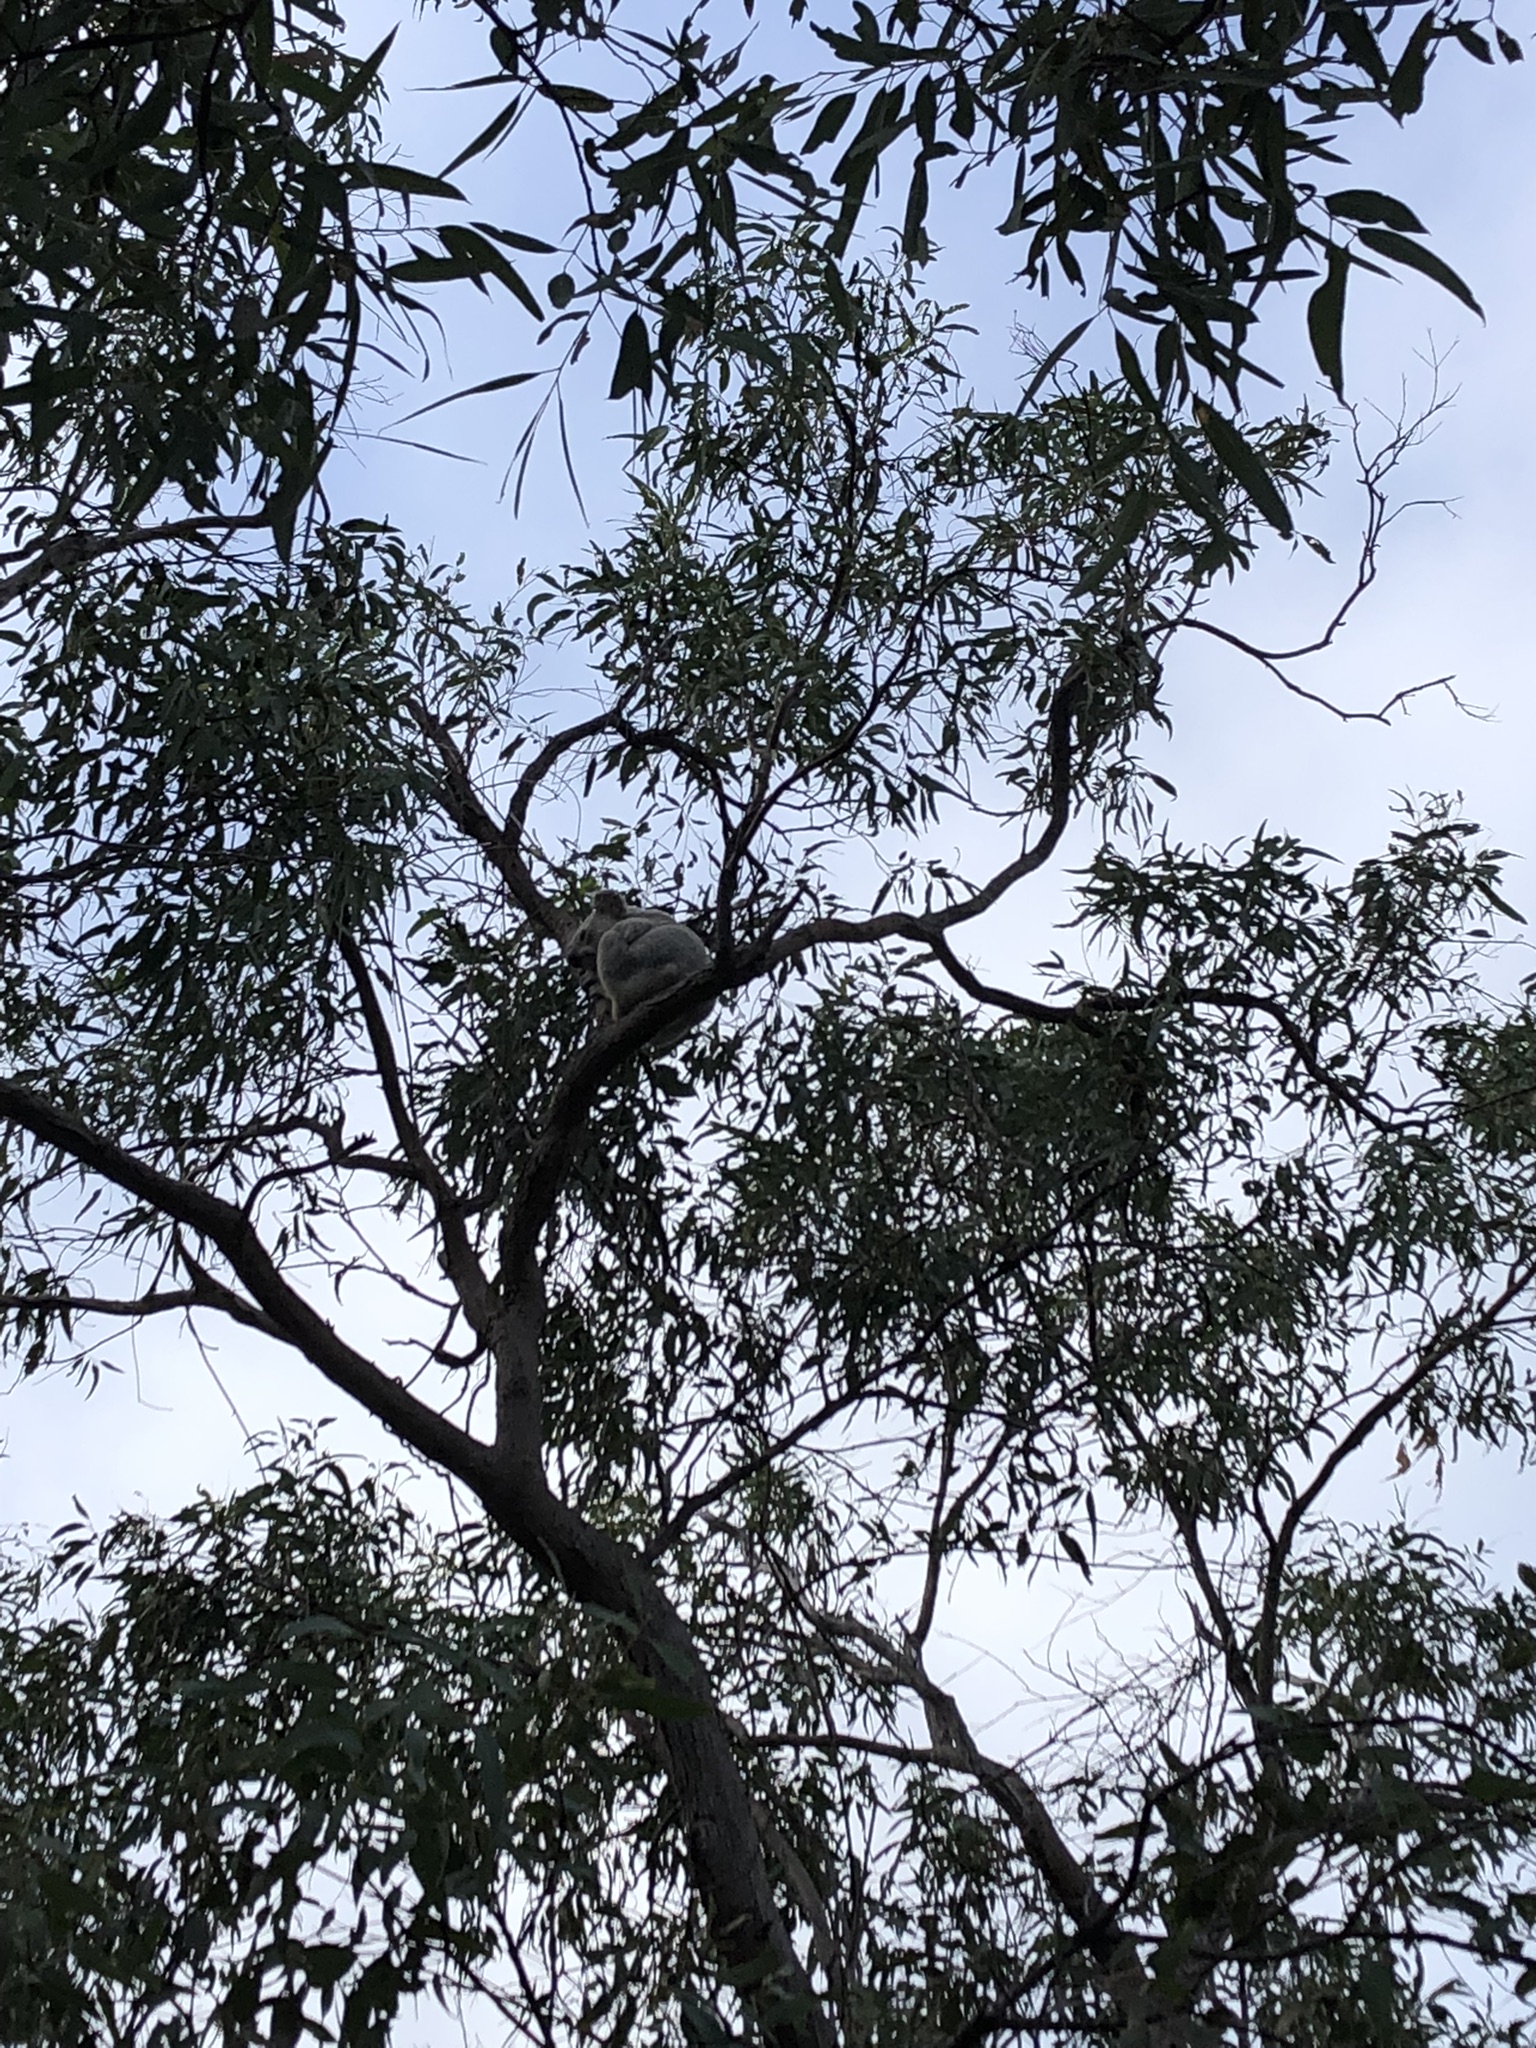 Koala high in the trees